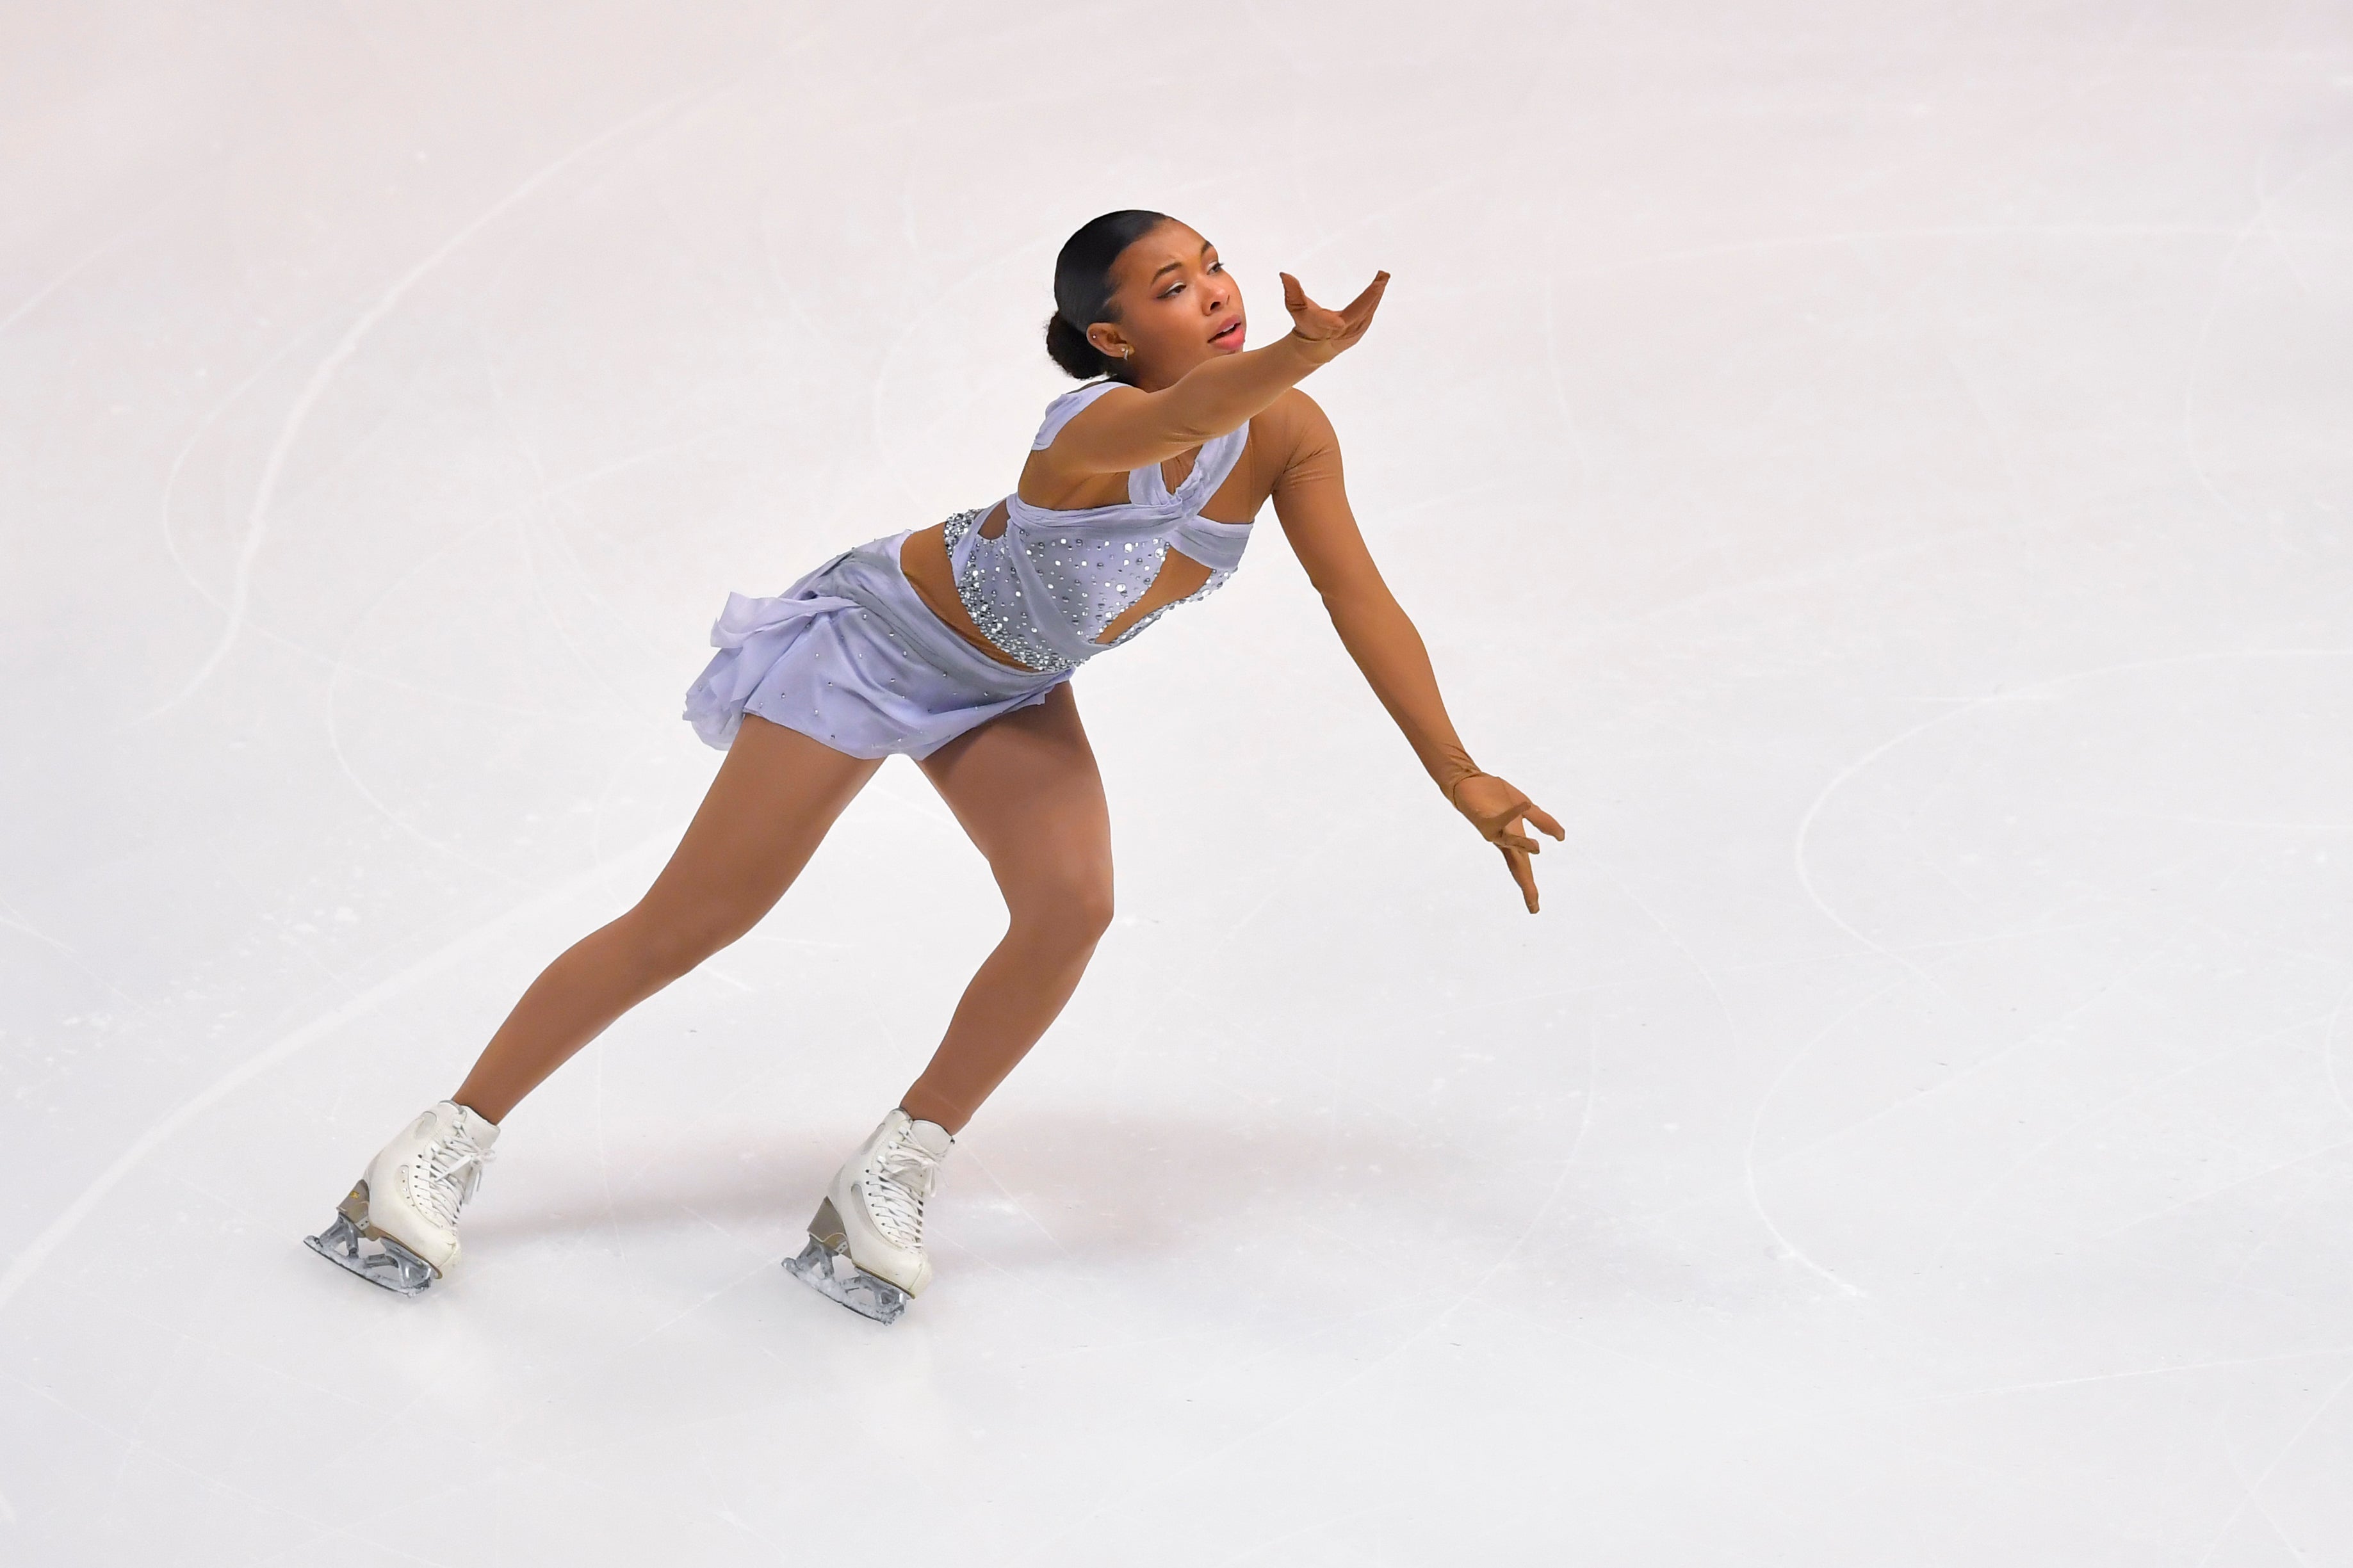 2019–20 isu grand prix of figure skating